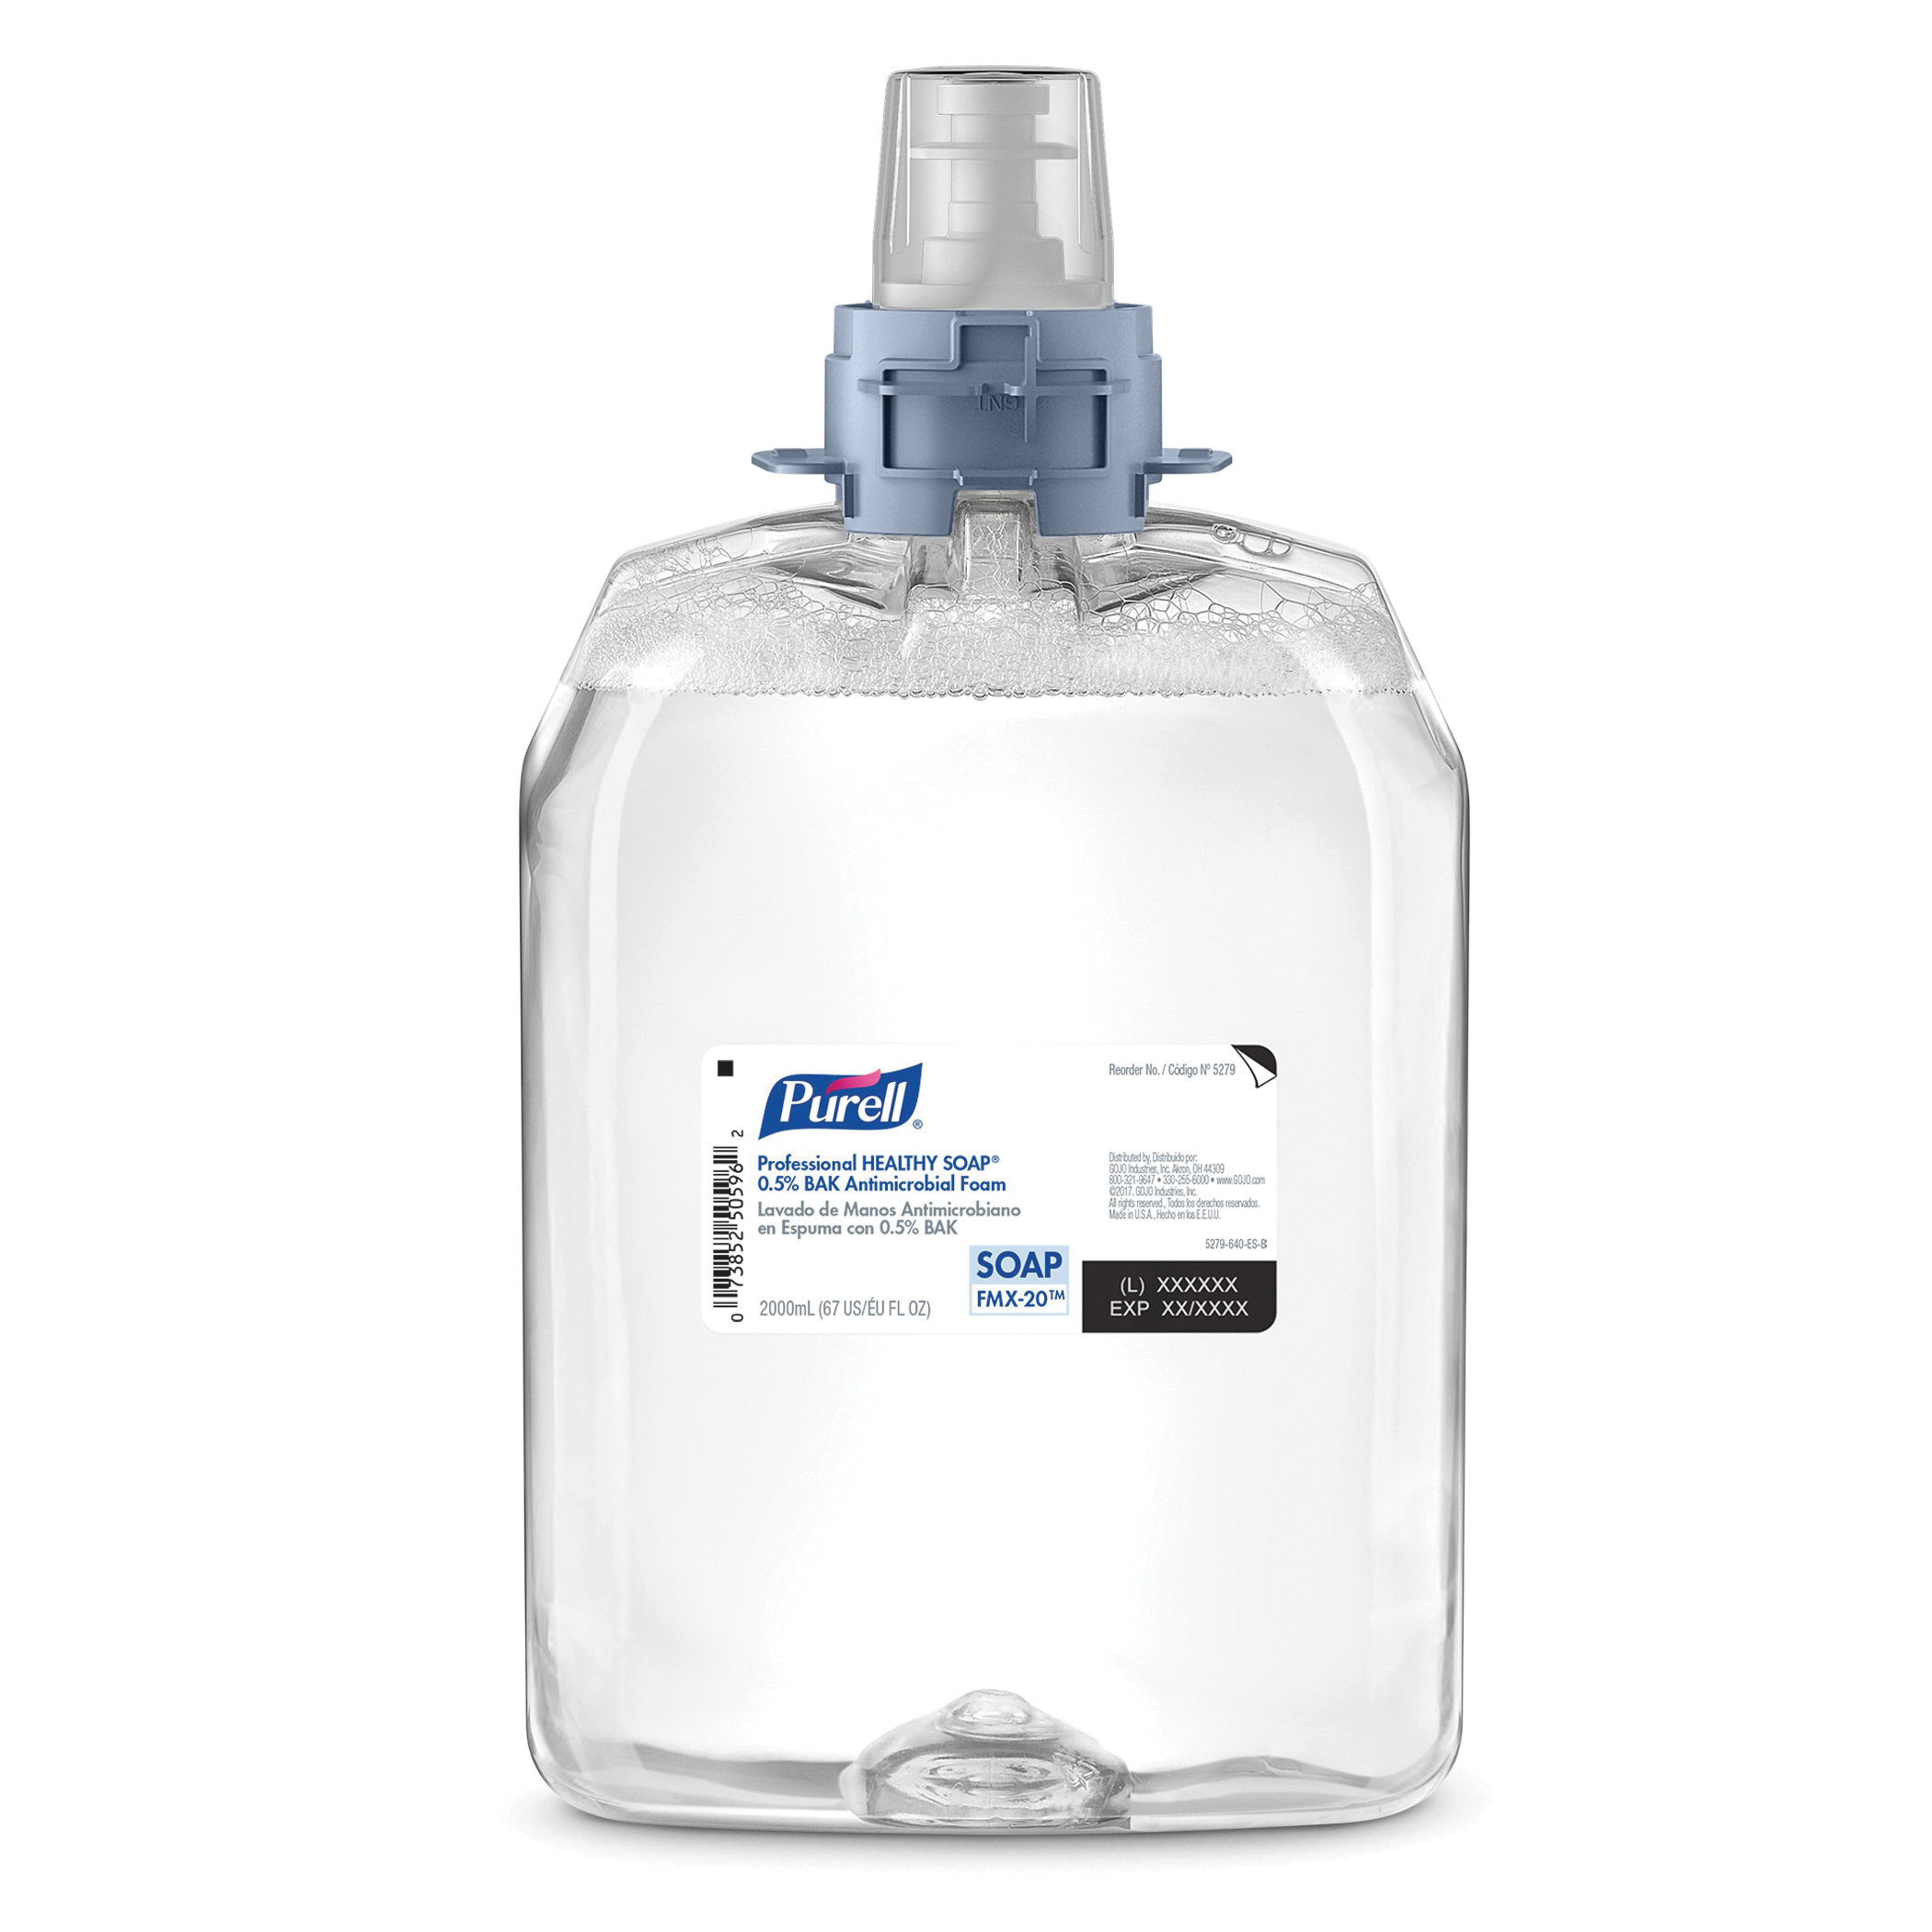 GOJO® 5262-02 Luxury Antibacterial Handwash, 2000 mL Nominal, Pump Bottle Package, Foam Form, Fresh Fruit Odor/Scent, Orange